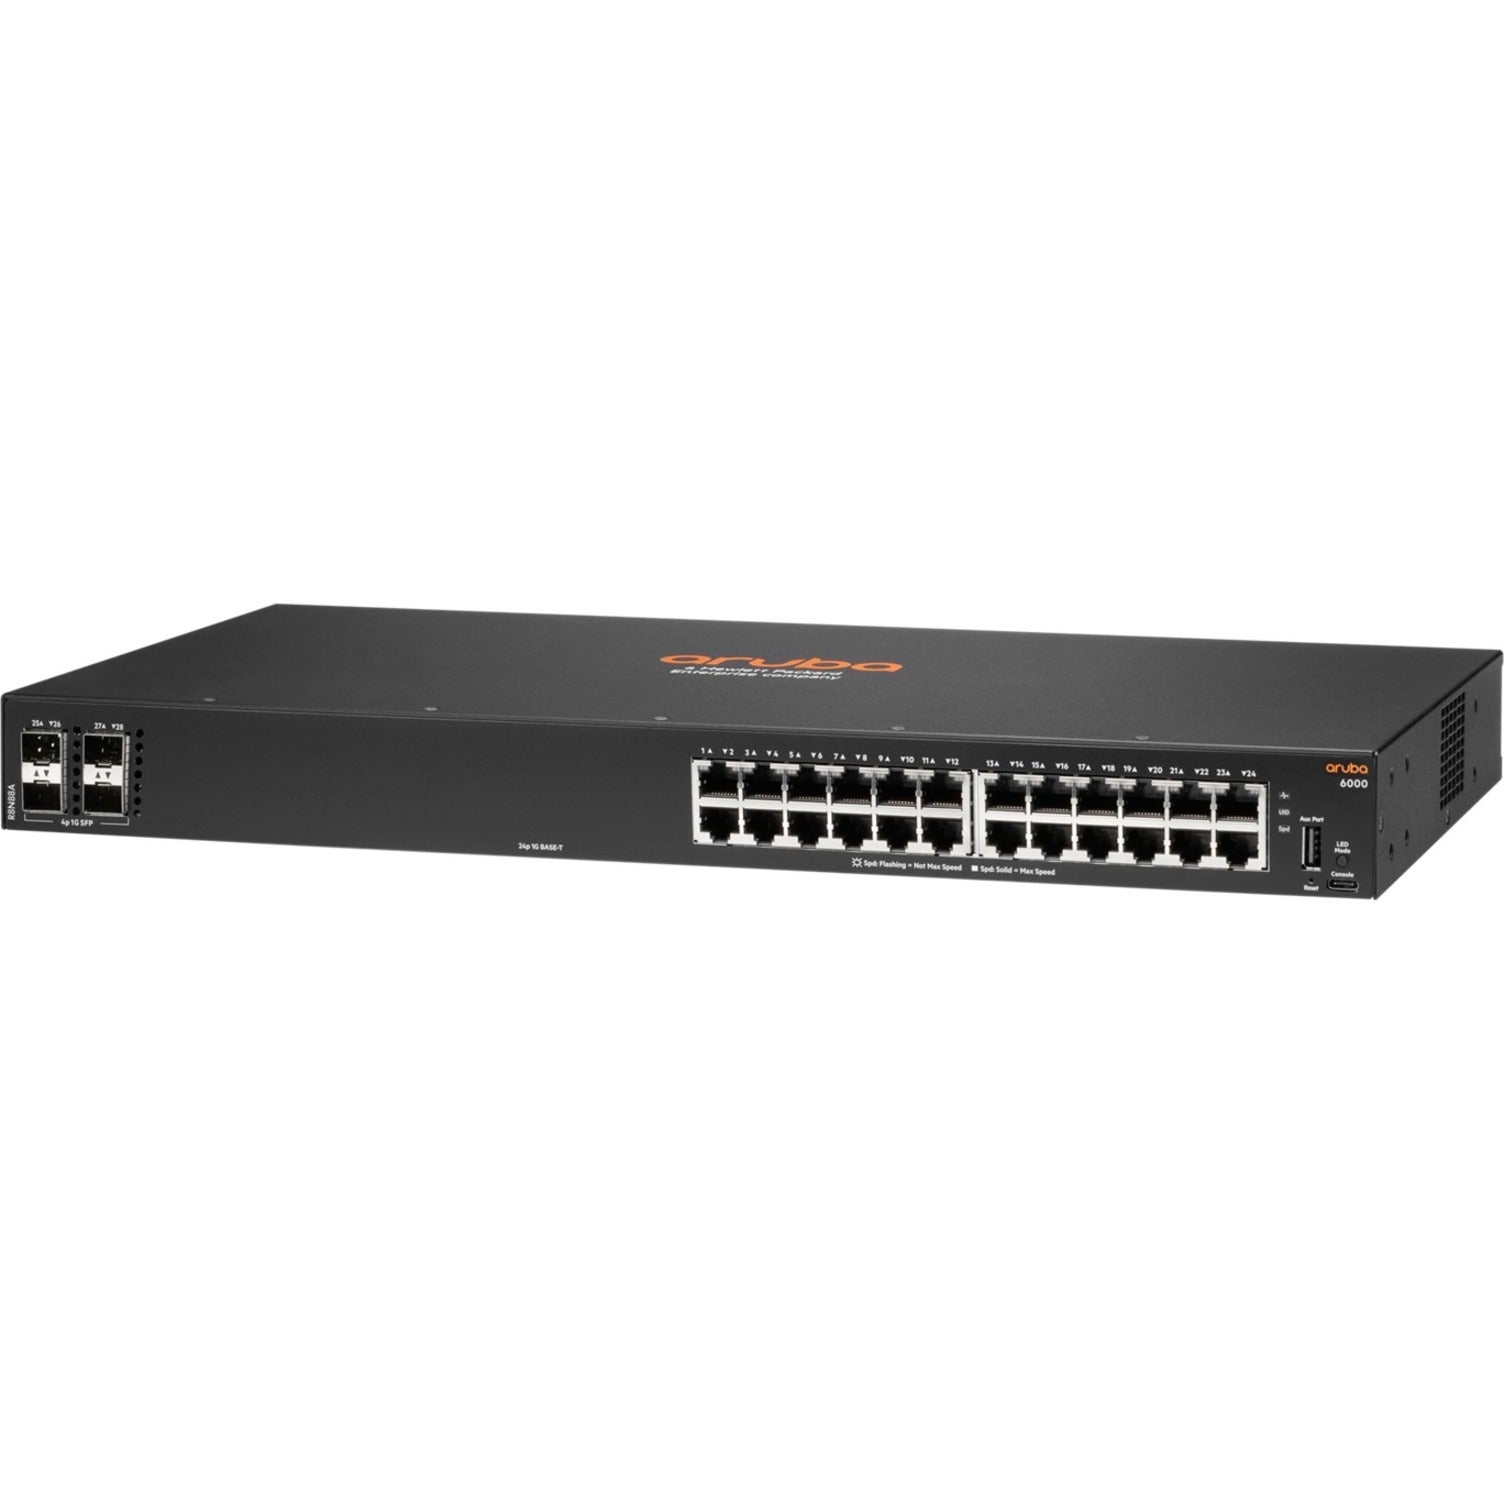 Aruba 6000 24G 4SFP Switch, Gigabit Ethernet, 24 Ports, Power over Ethernet